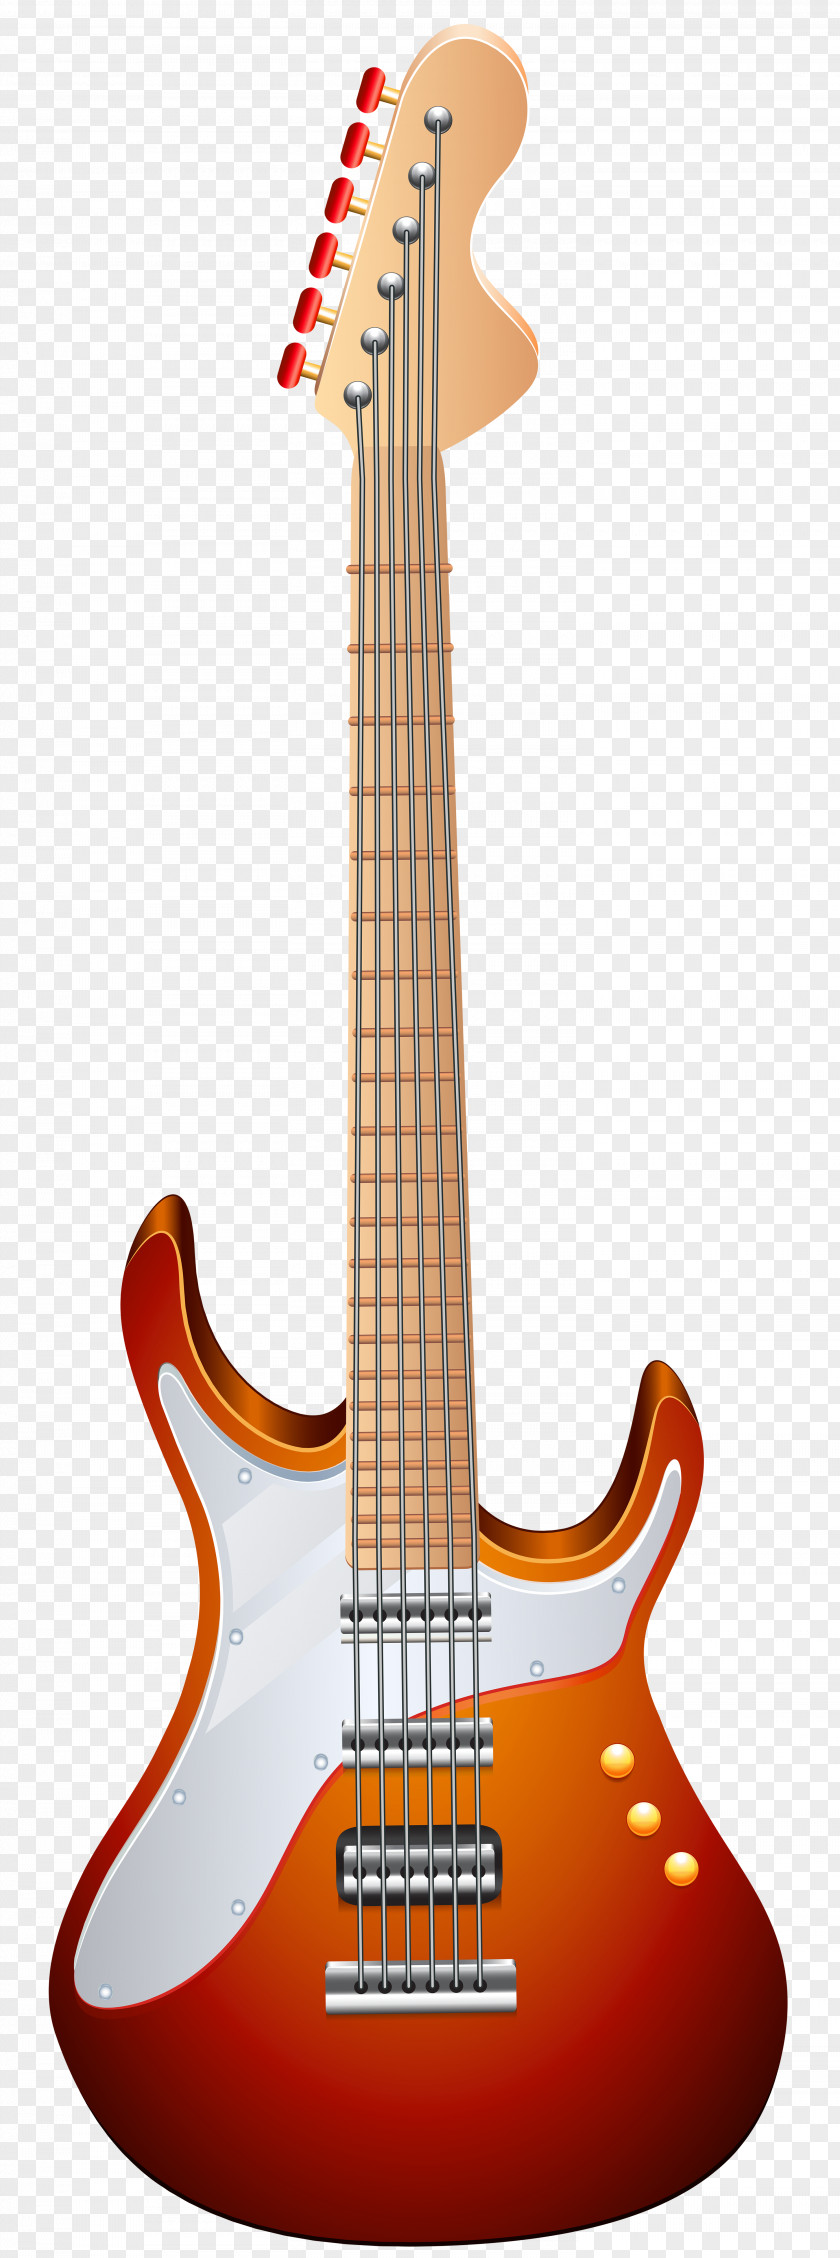 Guitar Transparent Clip Art Image PNG